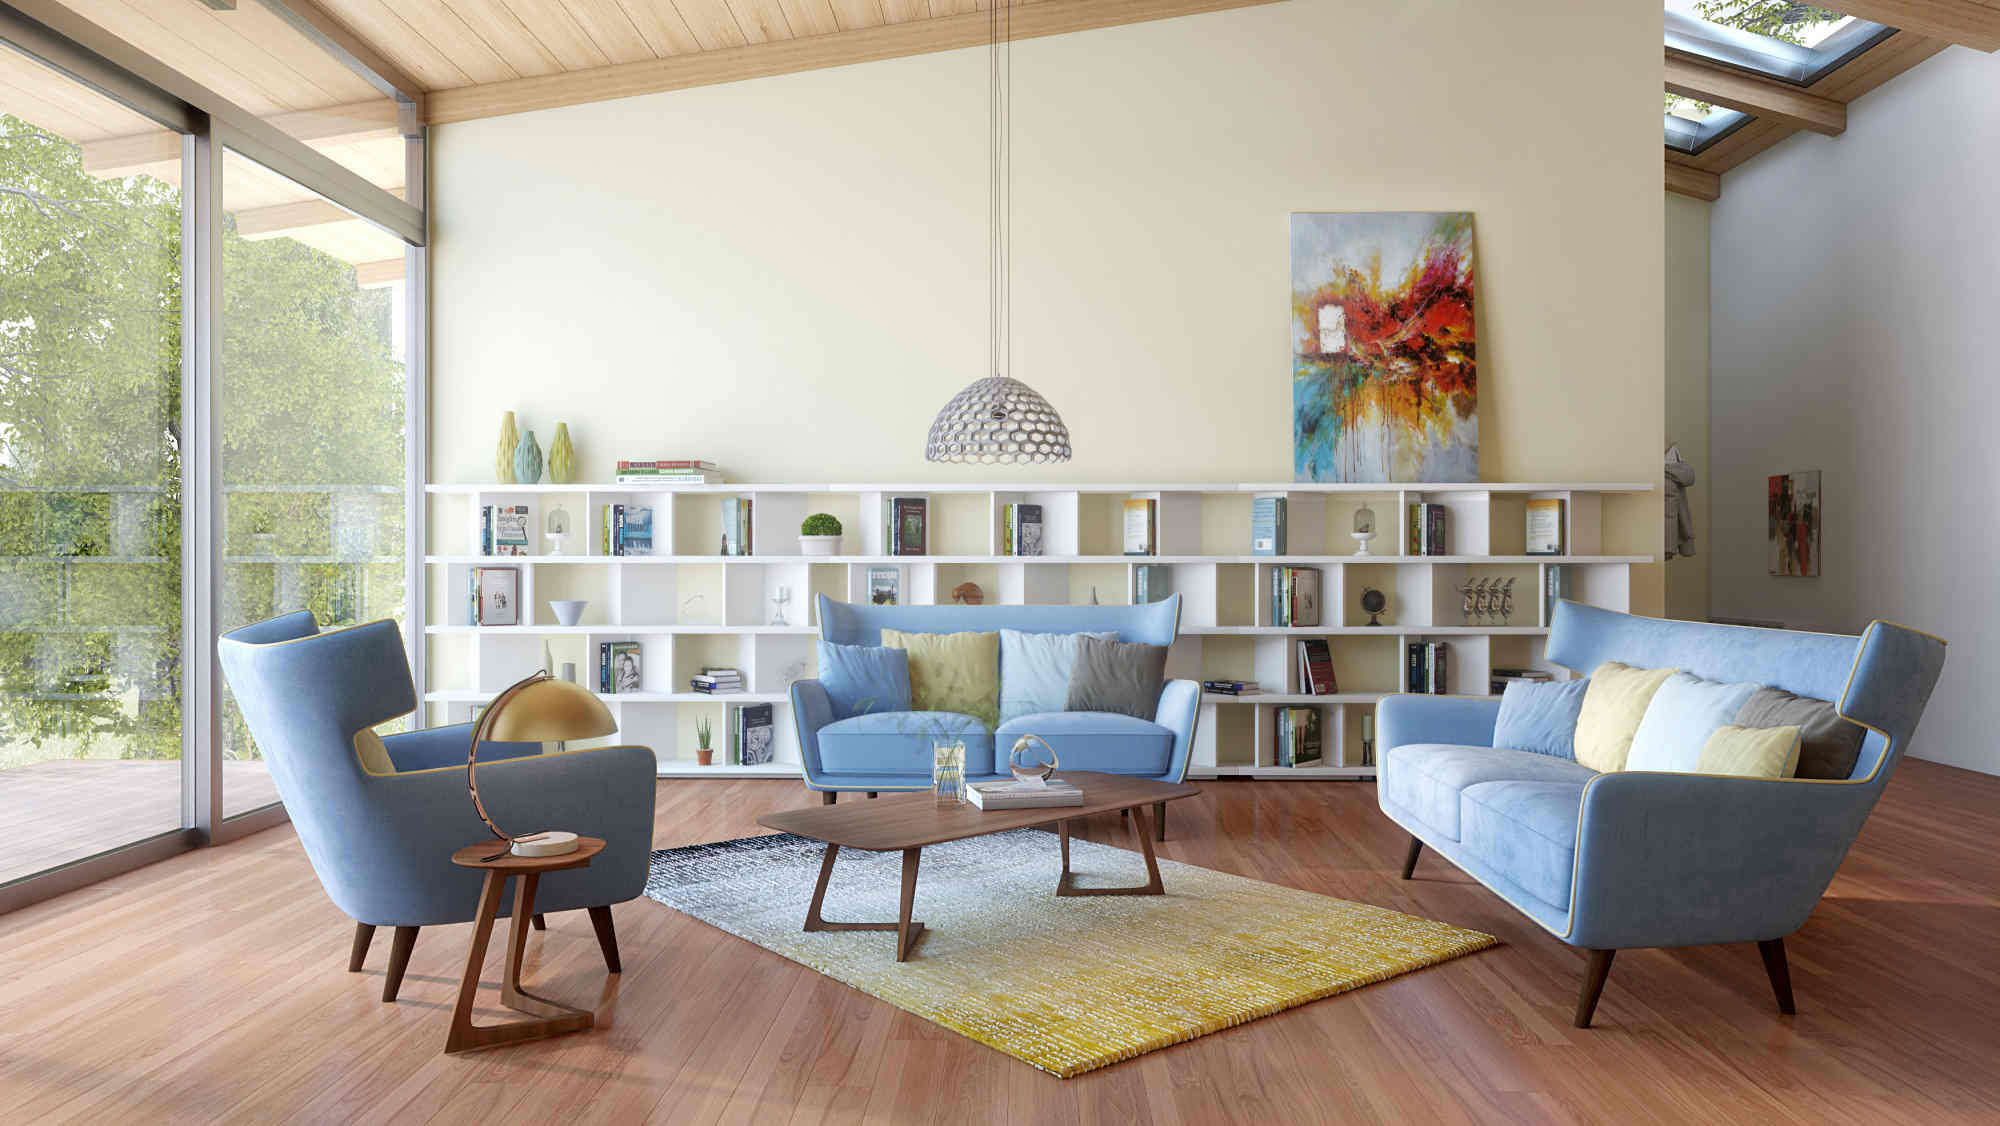 Spacious mid-century modern living room.  Source: donpedrobrooklyn.com